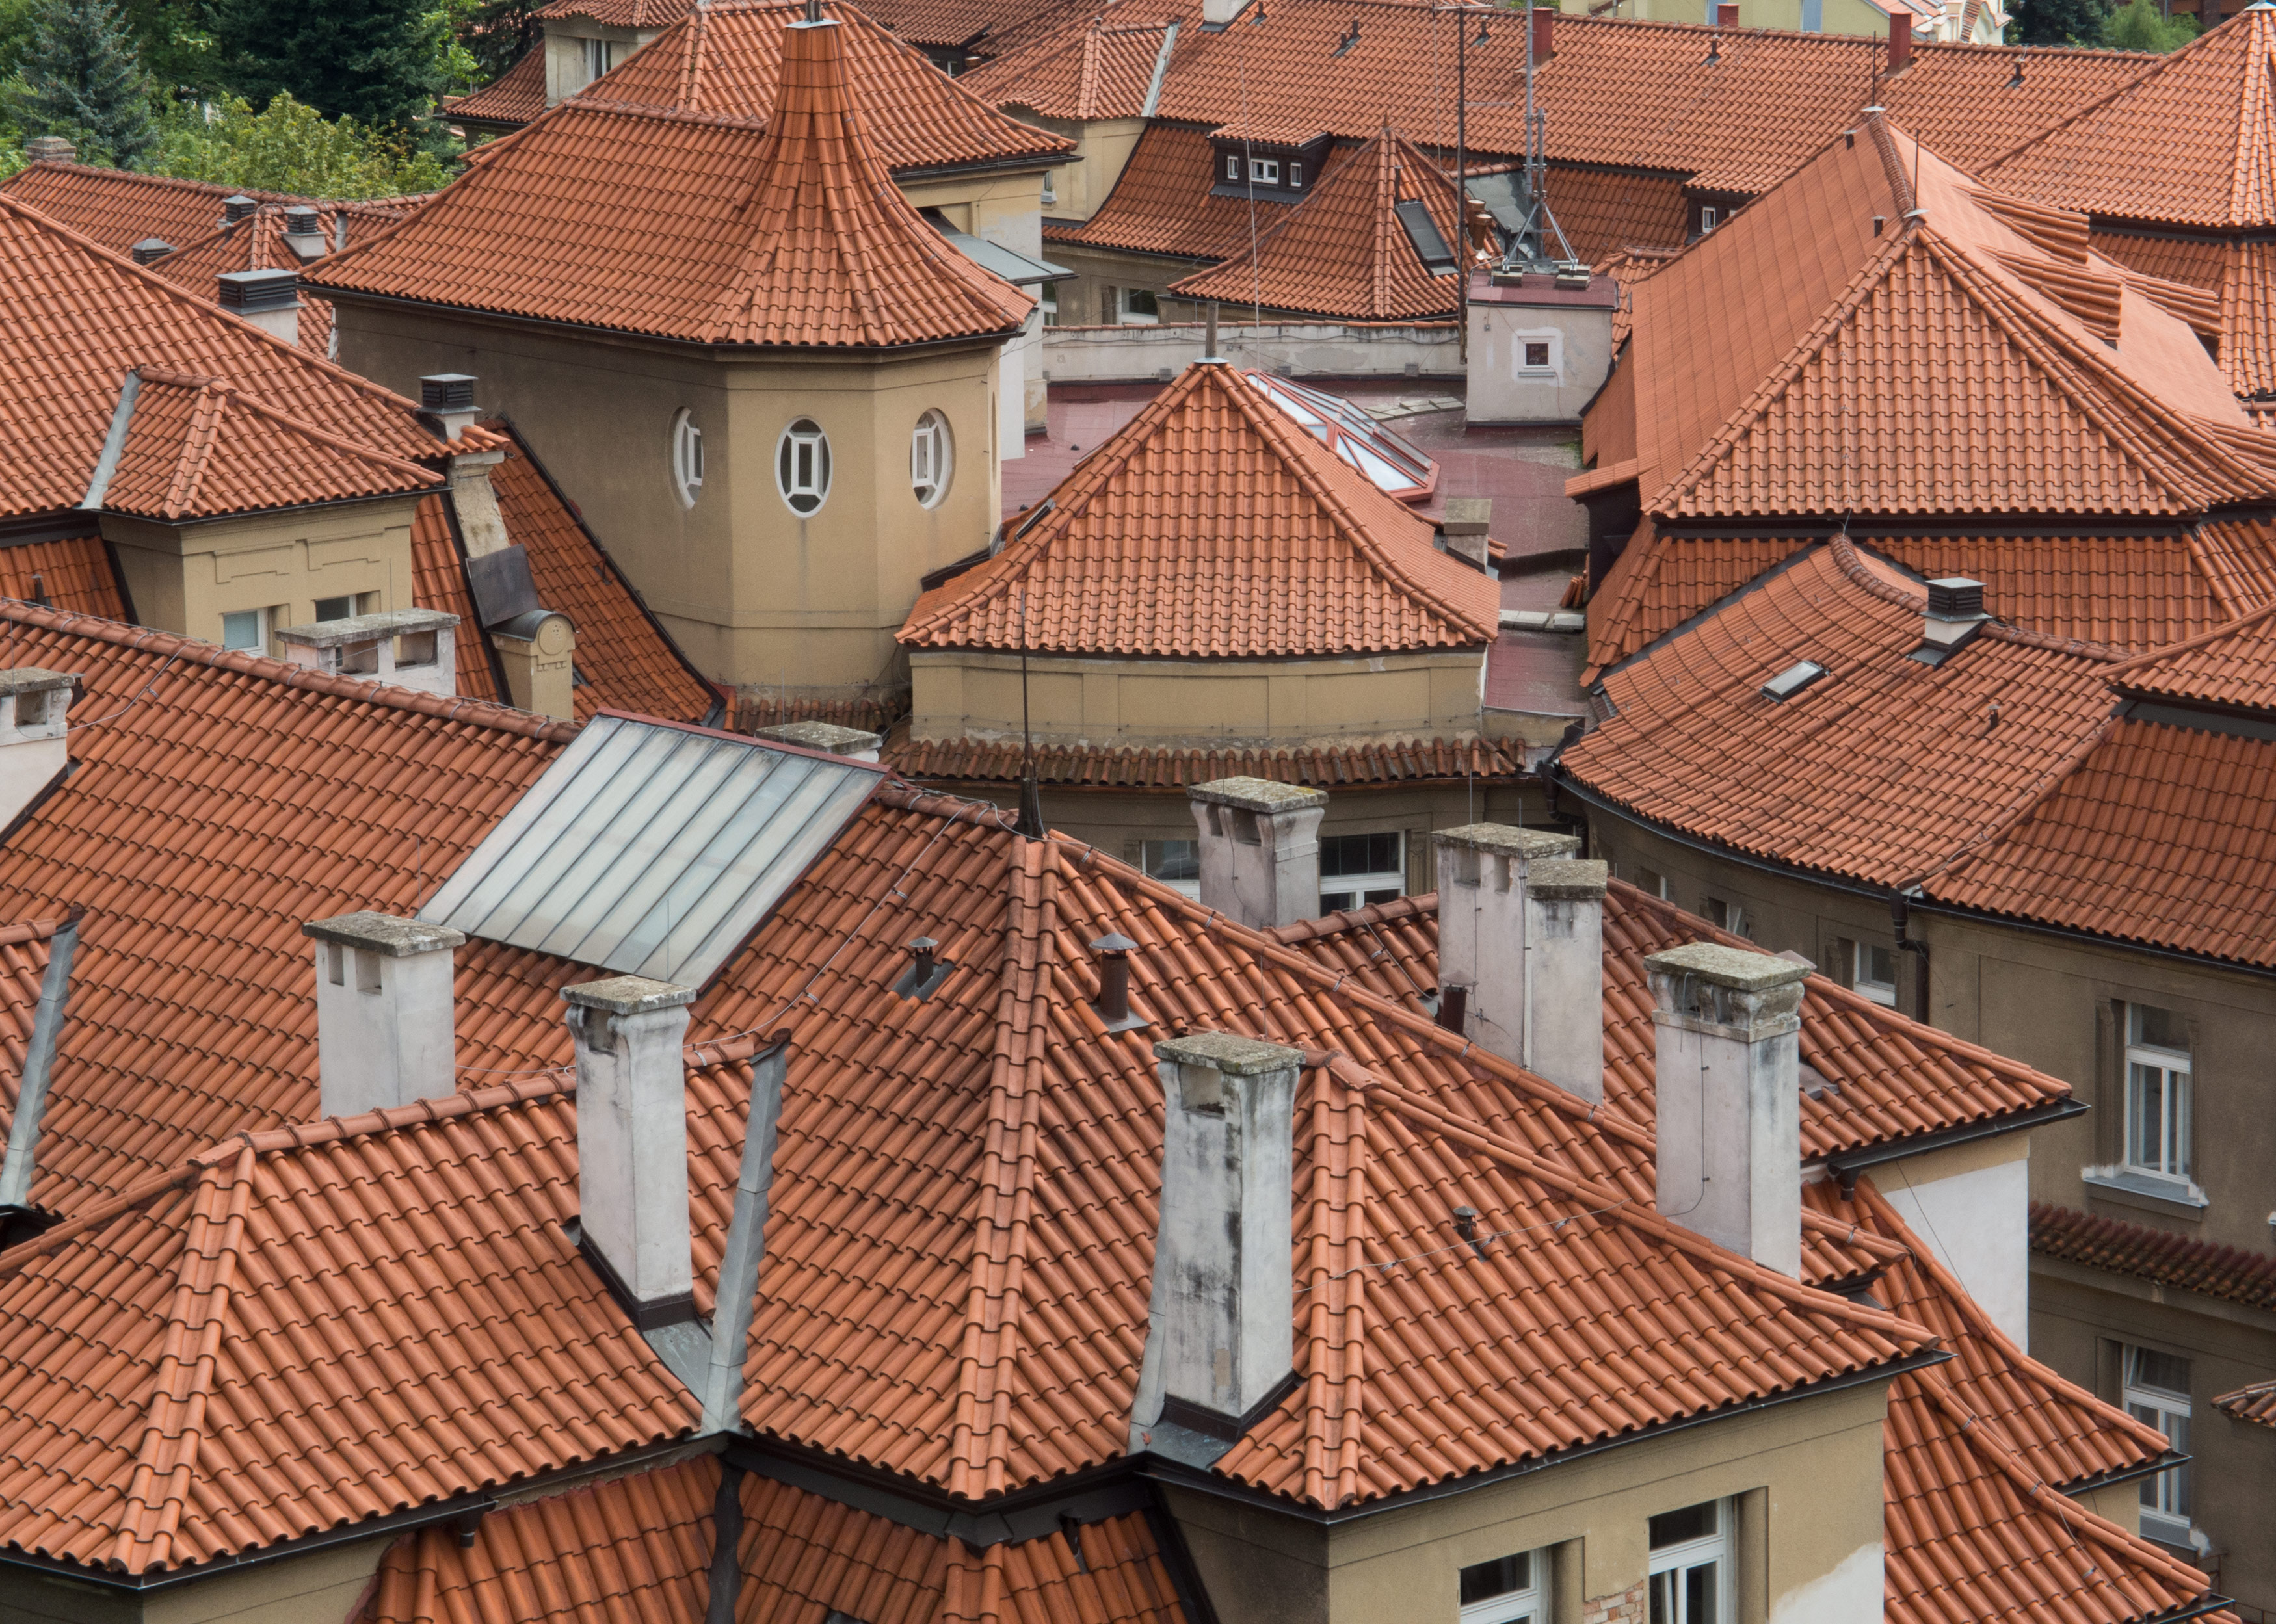 Free Image: Prague Roofs | Libreshot Public Domain Photos